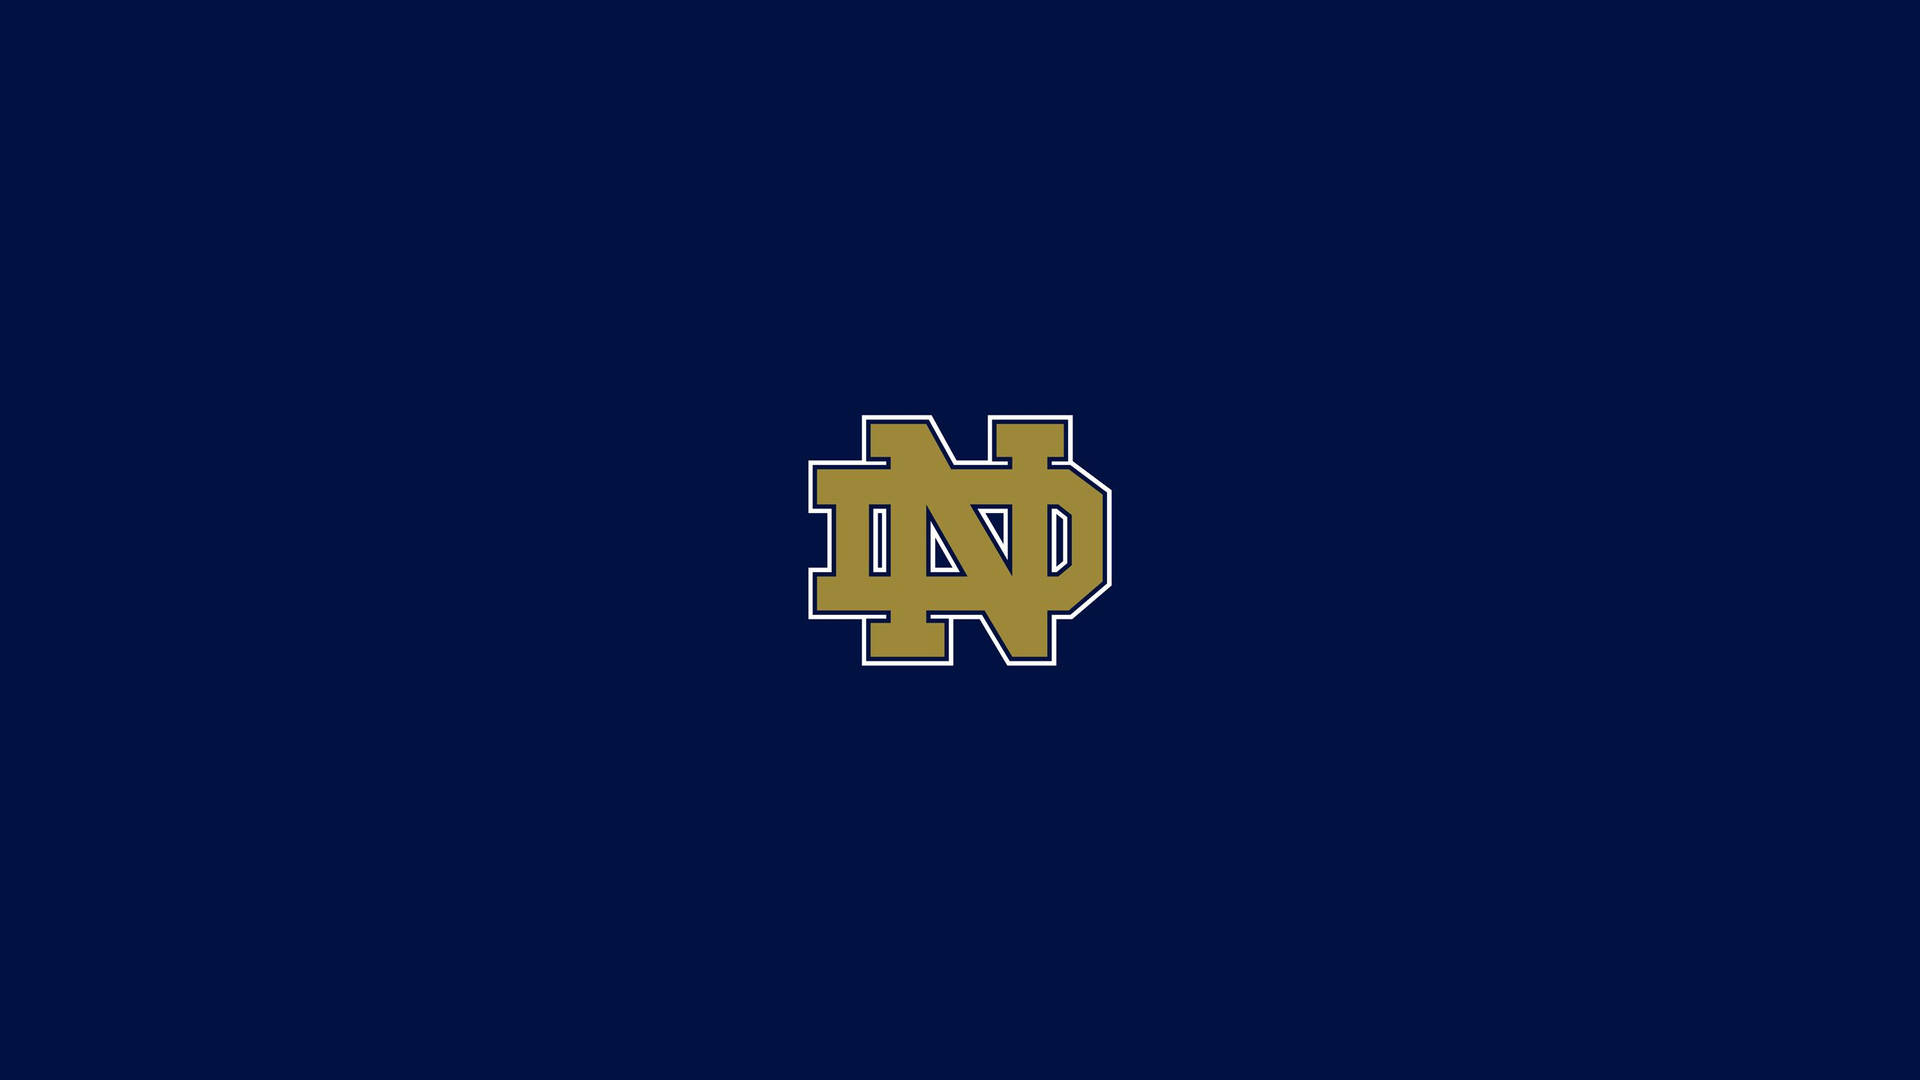 Notre Dame Logo On A Blue Background Wallpaper